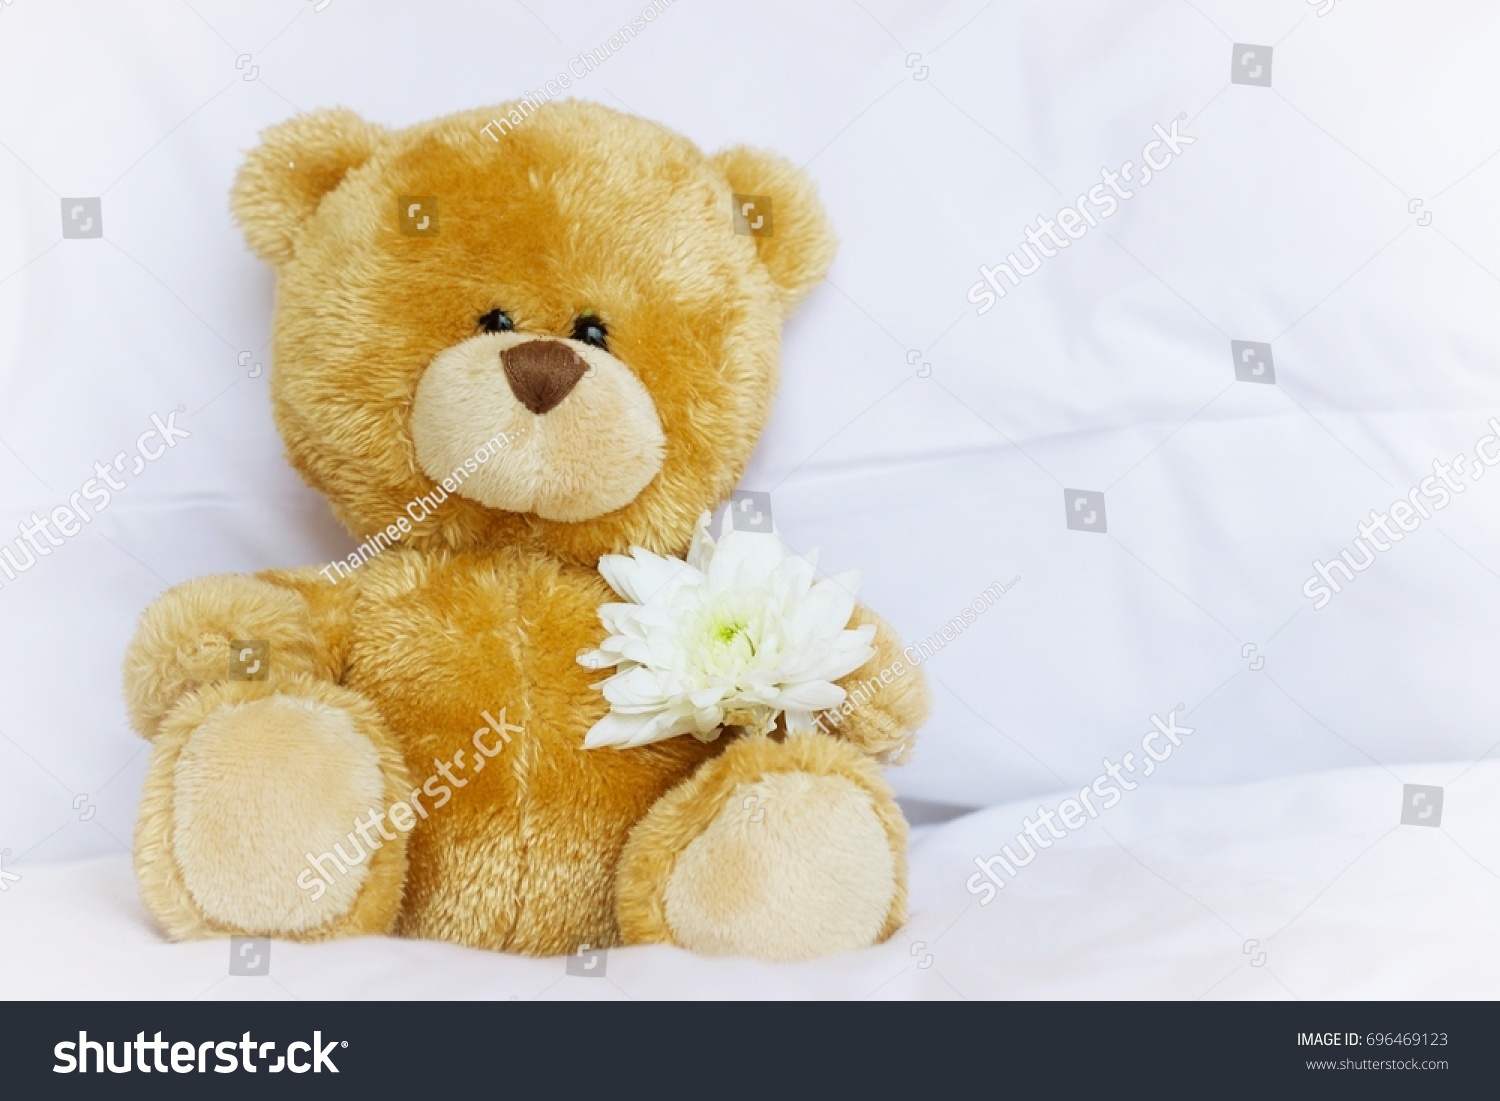 Teddy bear is holding flower on white background #696469123